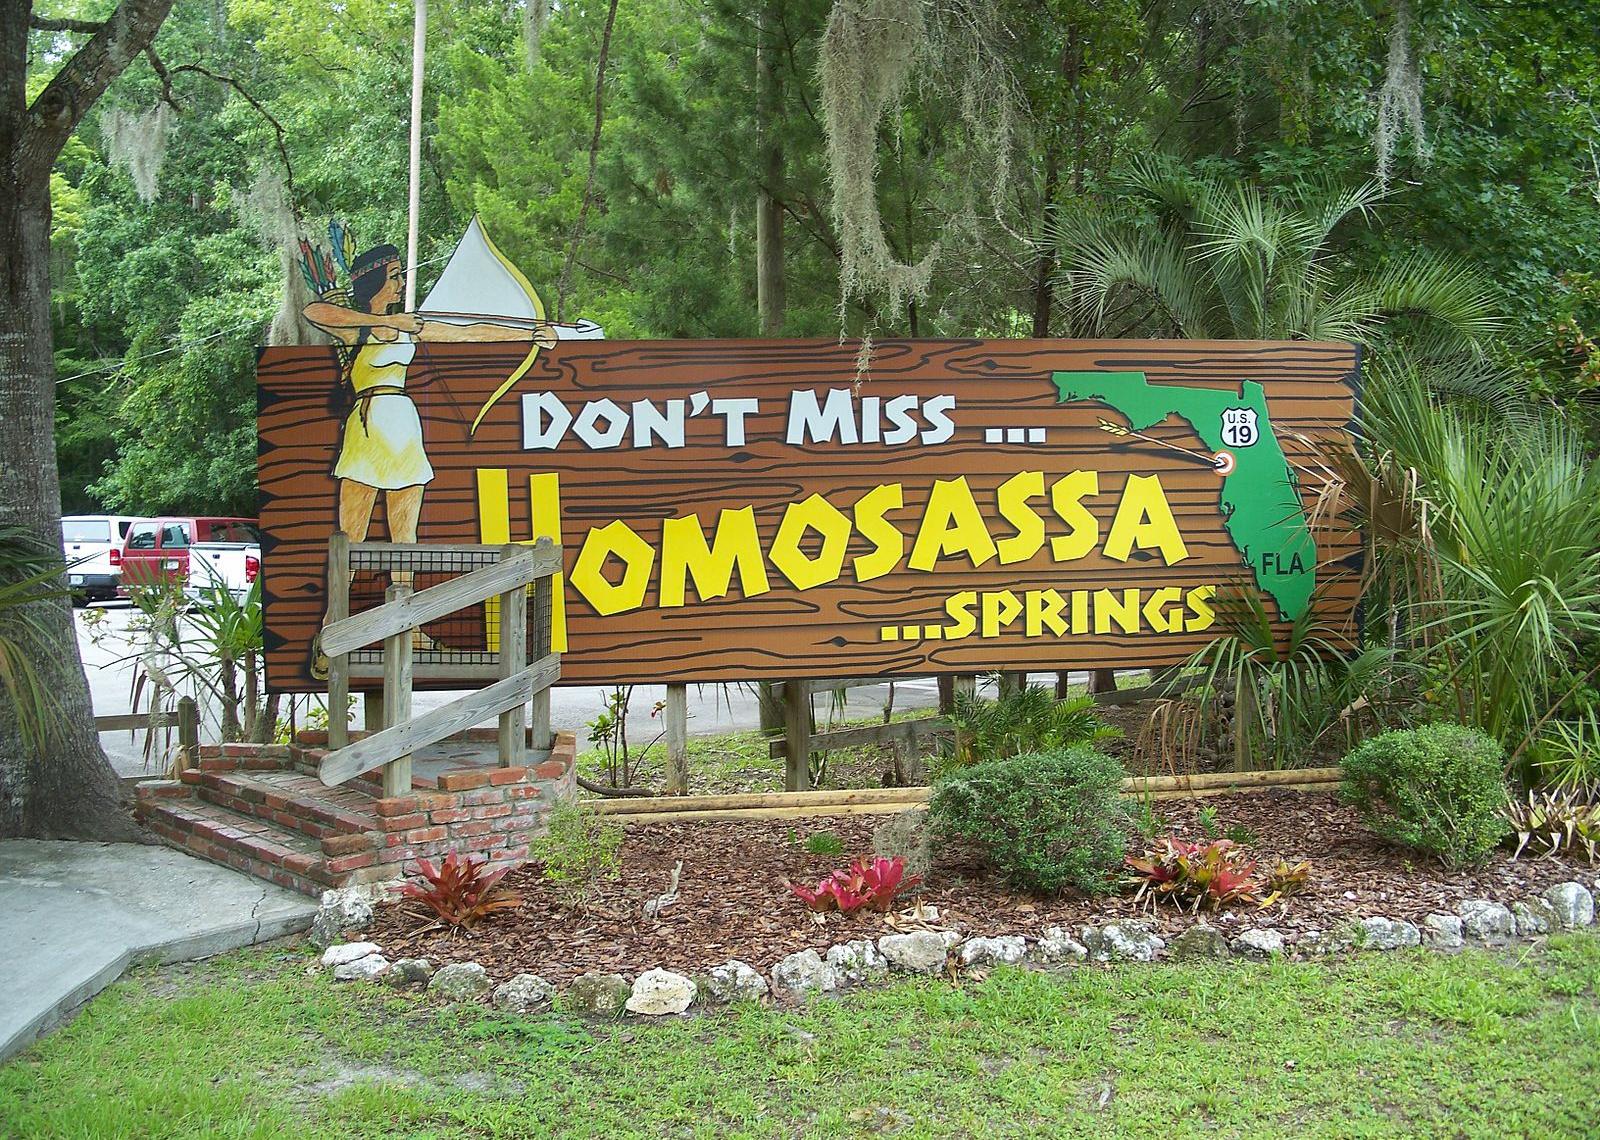 Homosassa Springs Wildlife State Park sign.